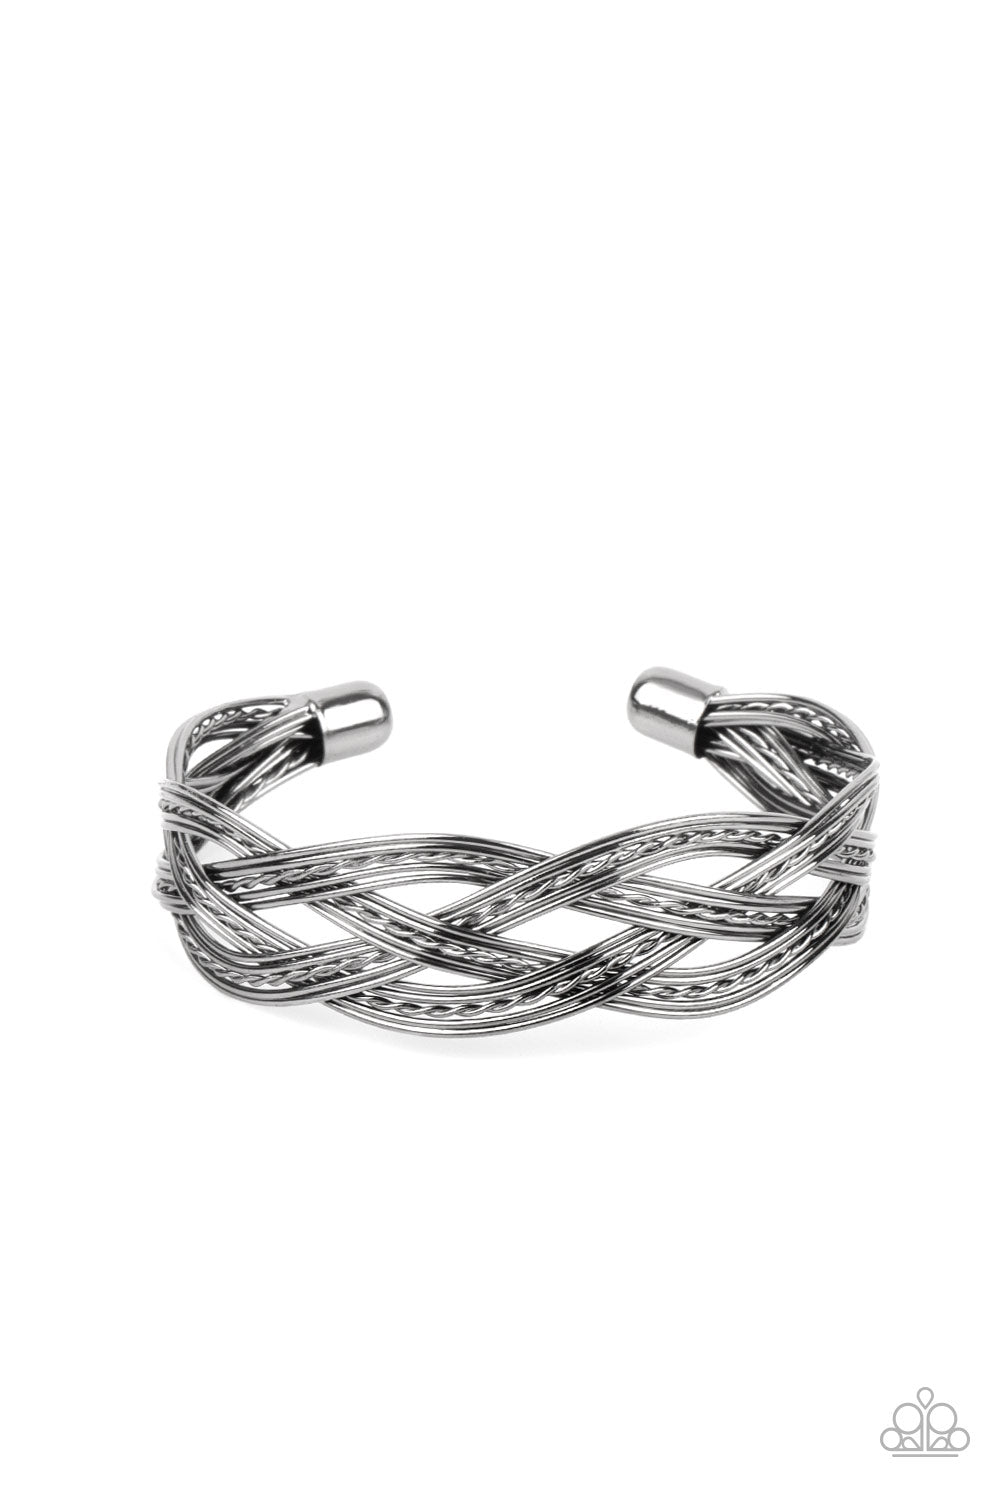 Get Your Wires Crossed - Black/GM cuff bracelet